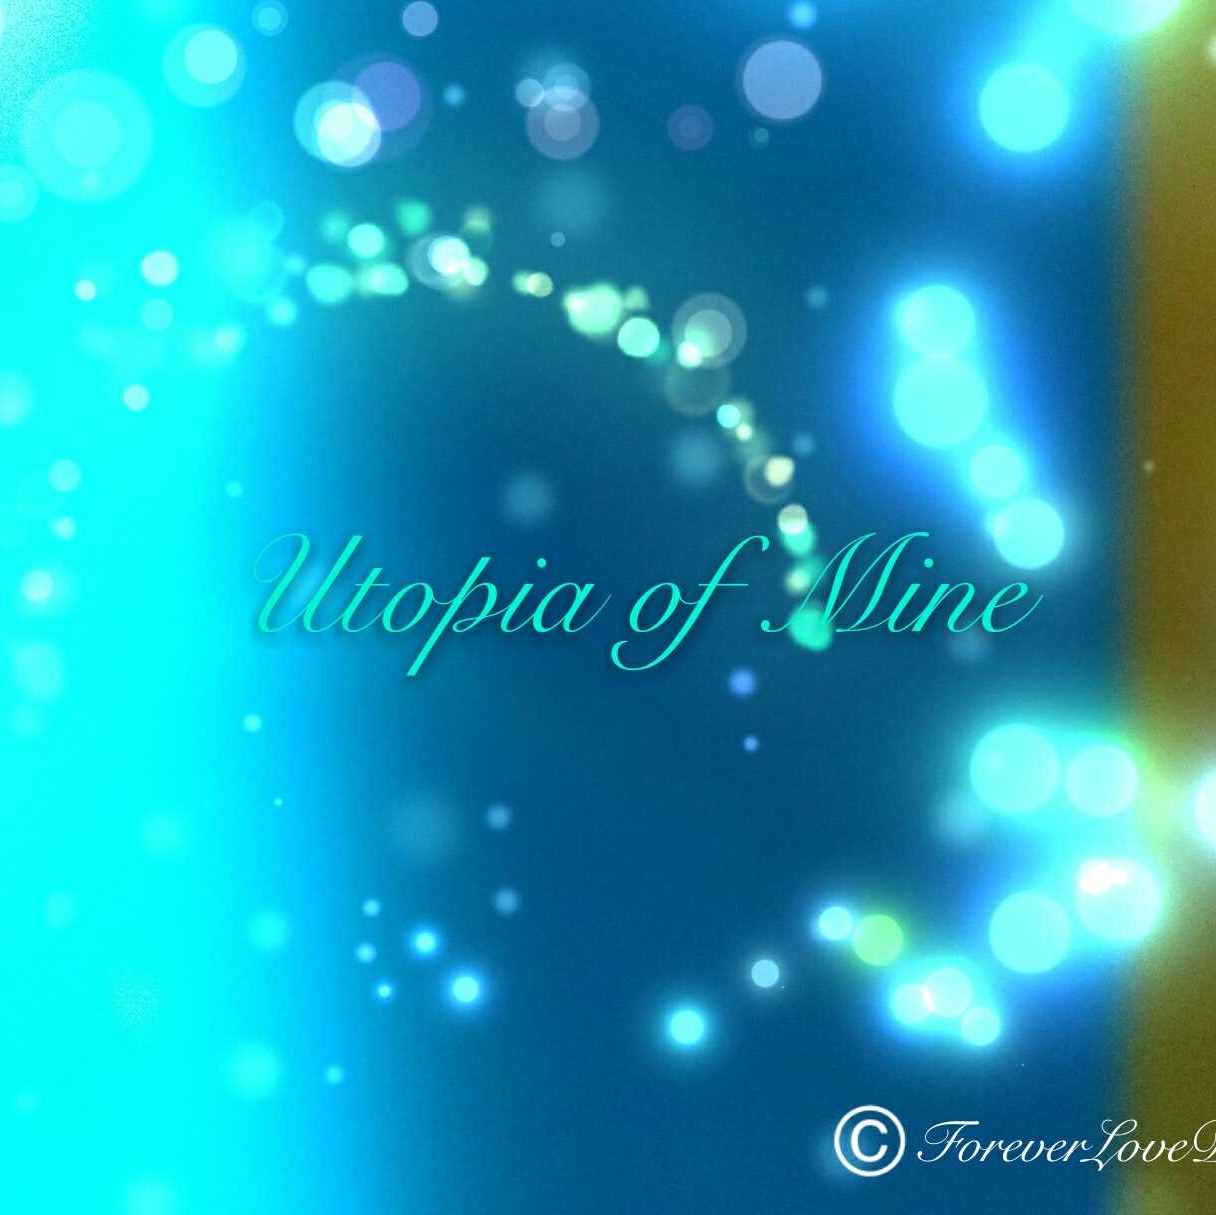 我的桃源-Utopia of mine